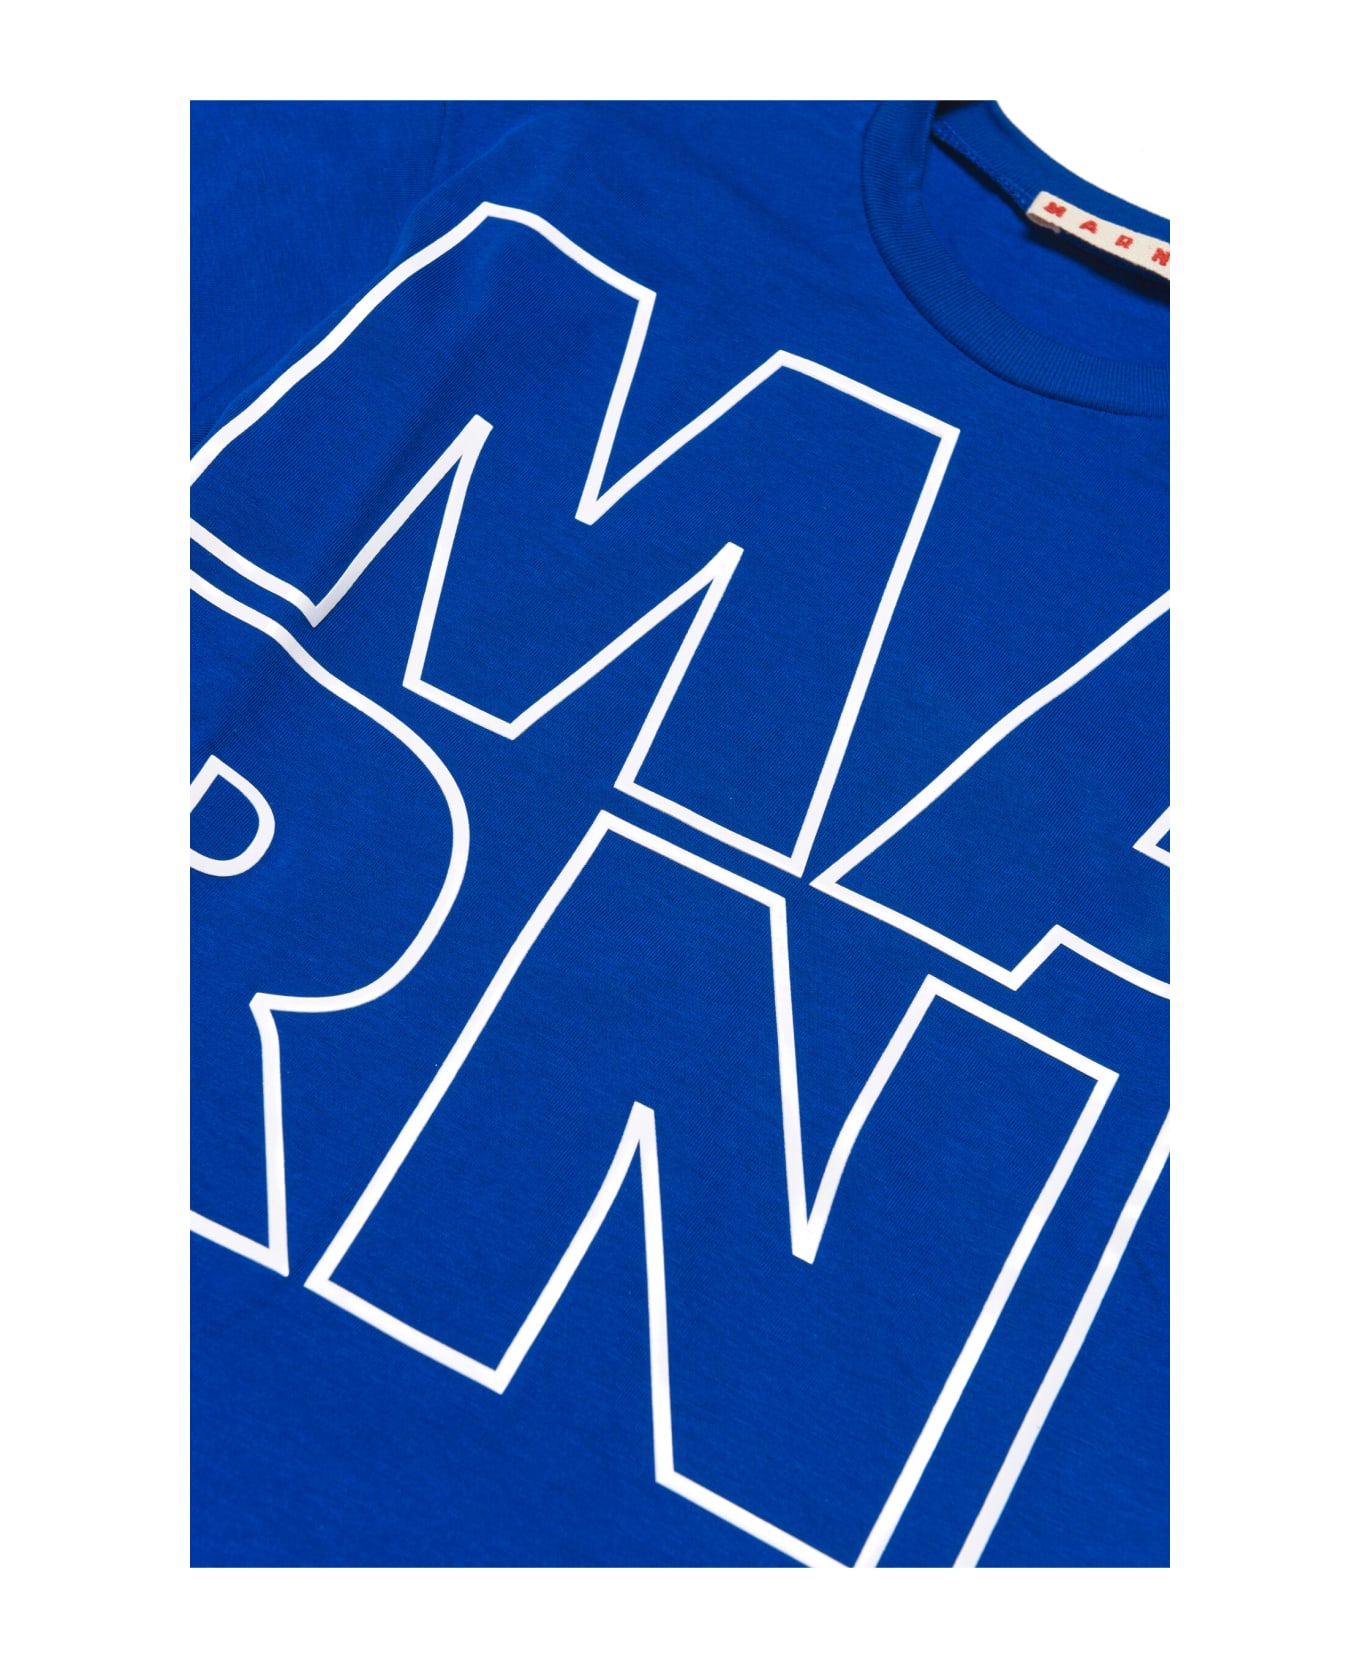 Marni Mt153u T-shirt Marni Blue T-shirt In Jersey With Displaced Marni Logo - Surf the web